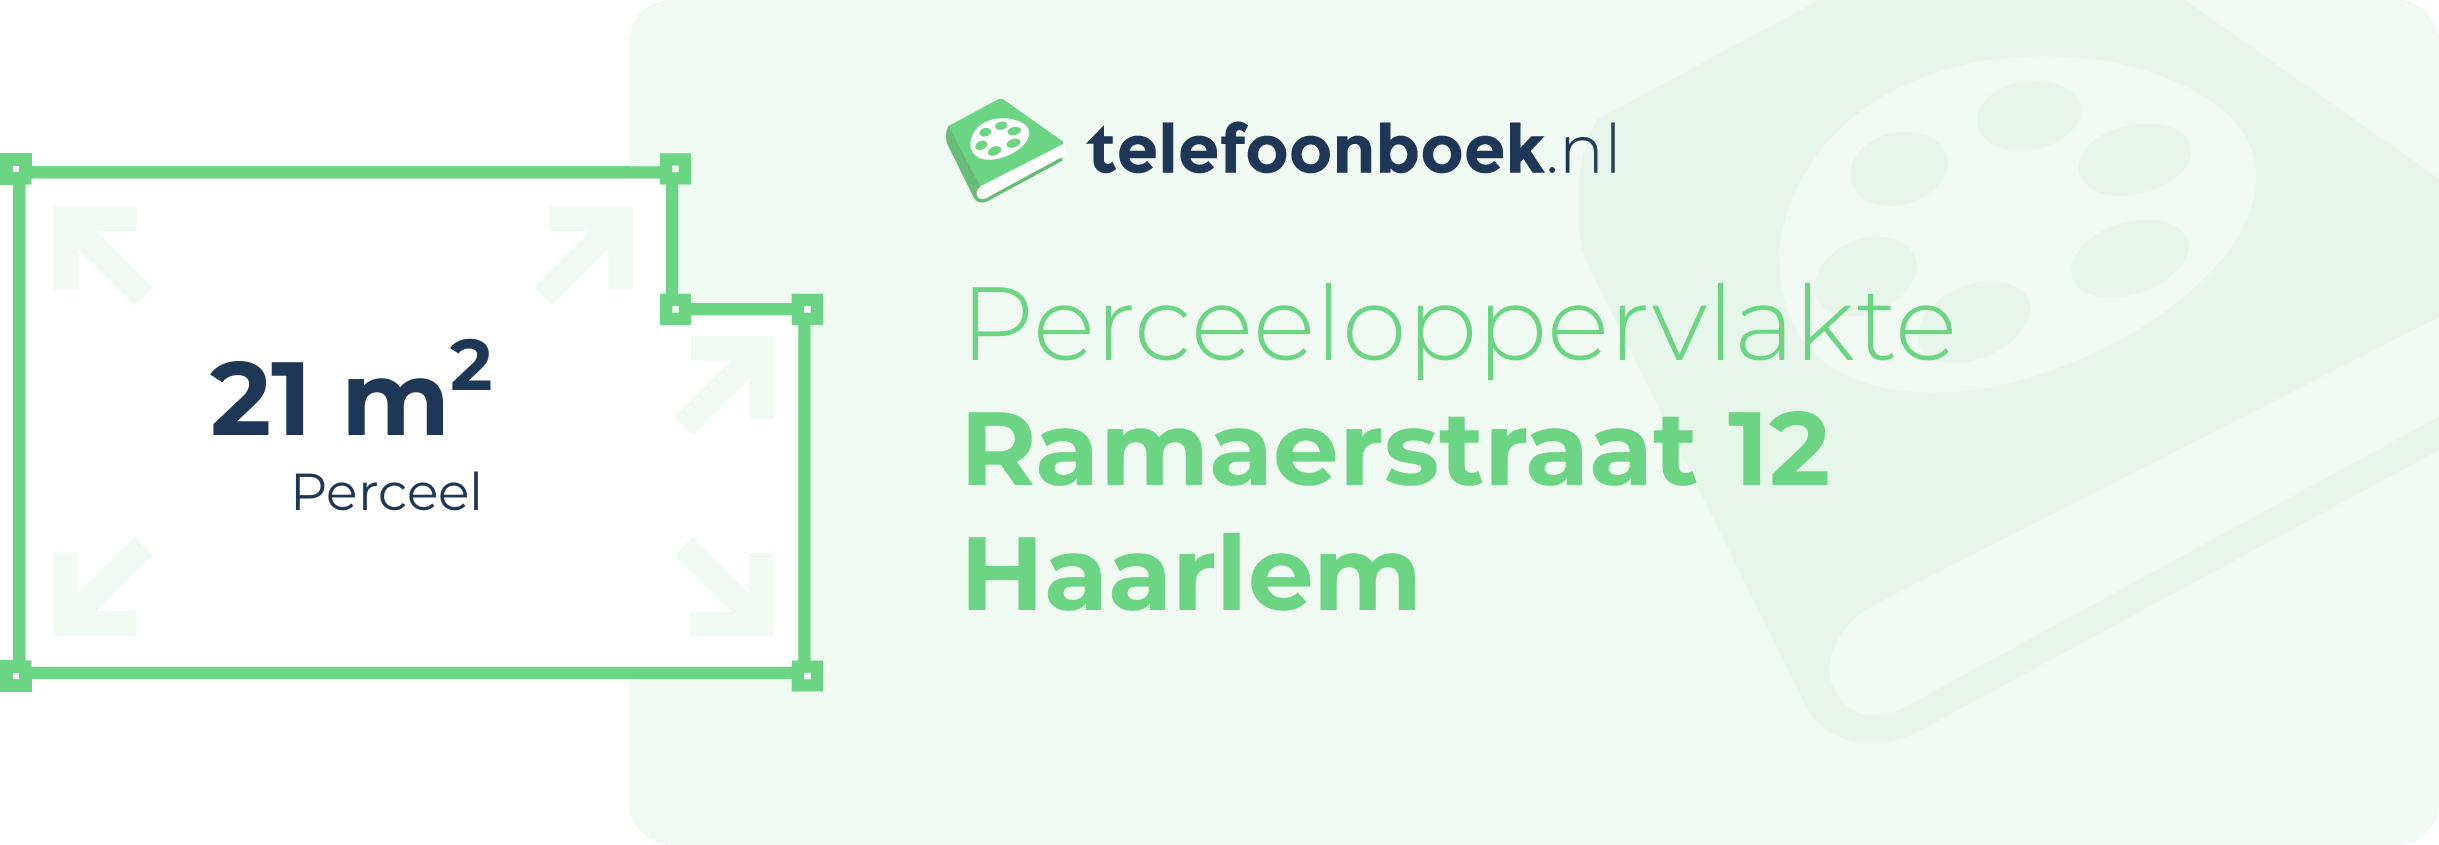 Perceeloppervlakte Ramaerstraat 12 Haarlem